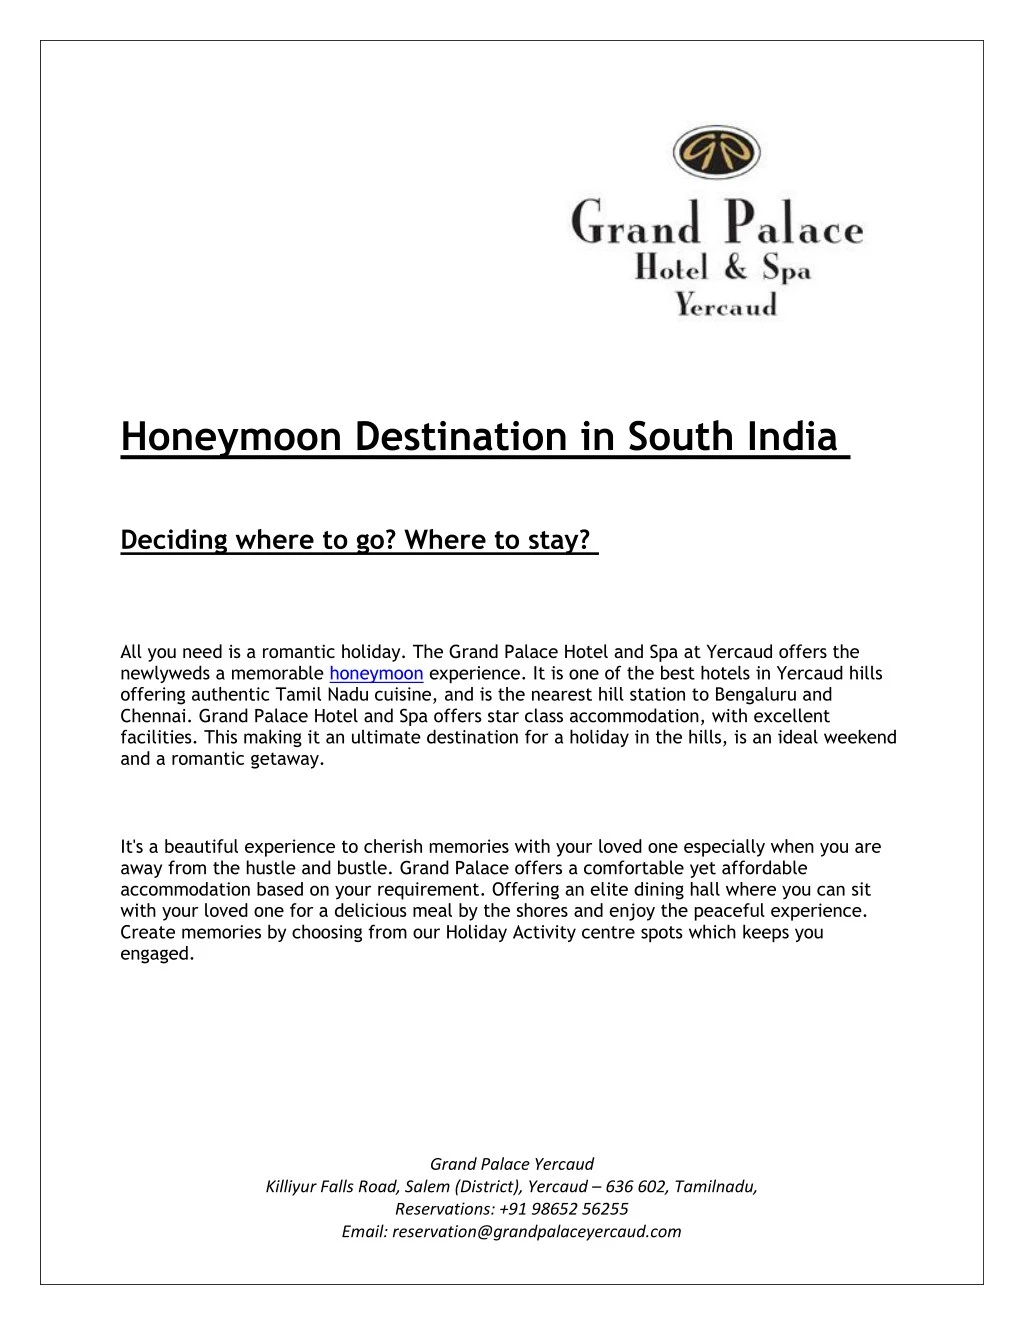 honeymoon destination in south india deciding